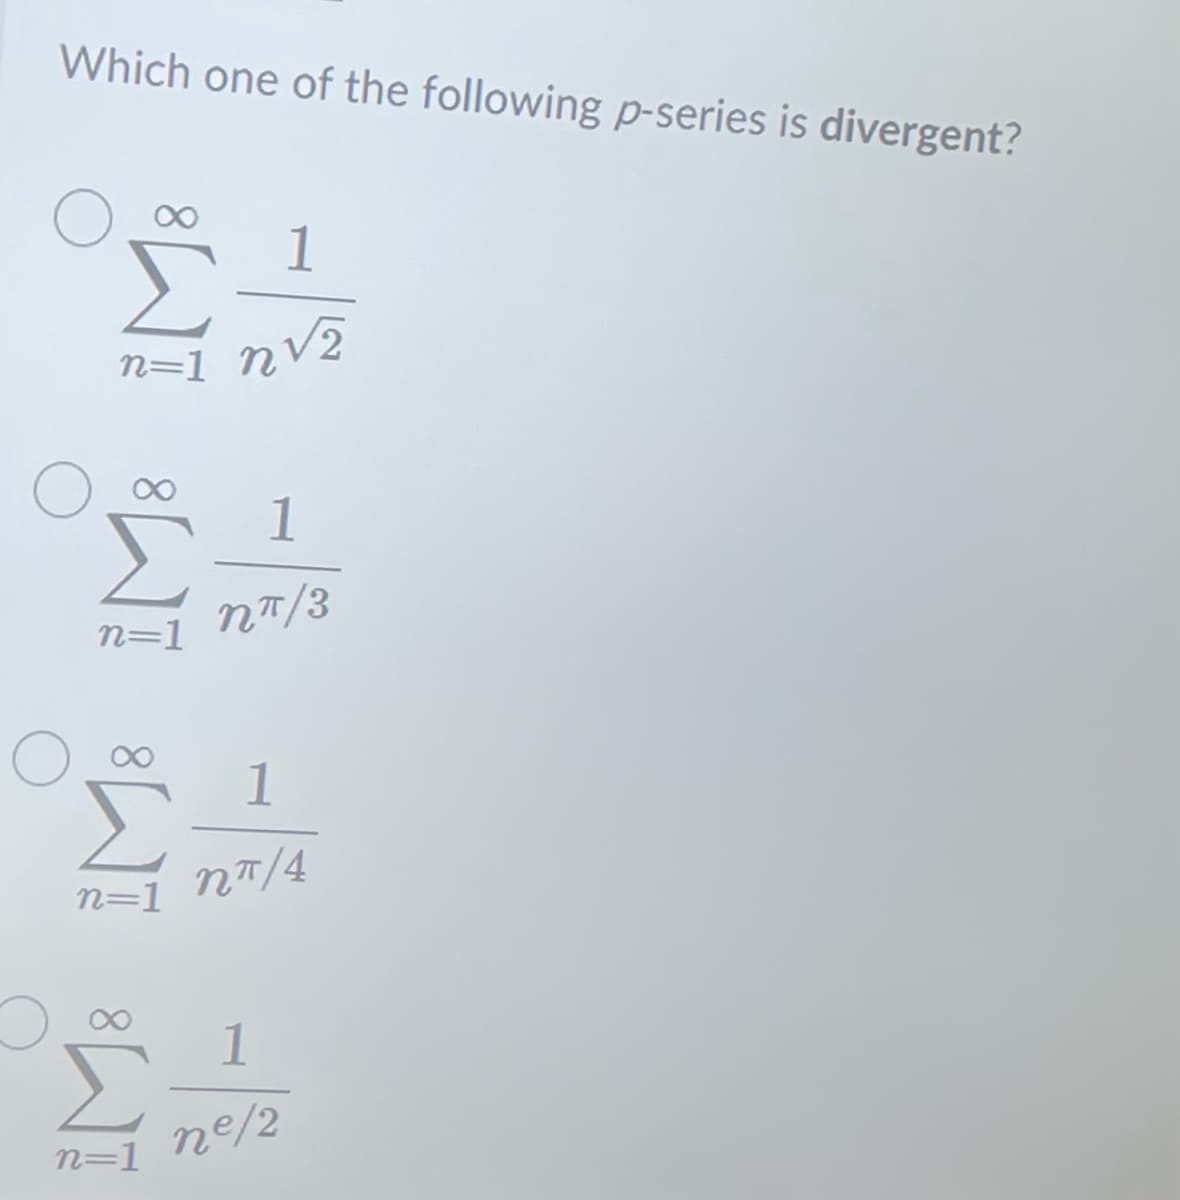 Which one of the following p-series is divergent?
S 1
n=1 n√2
n=1
1
n=1 nπ/4
8
1
nπ/3
n=1
1
ne/2